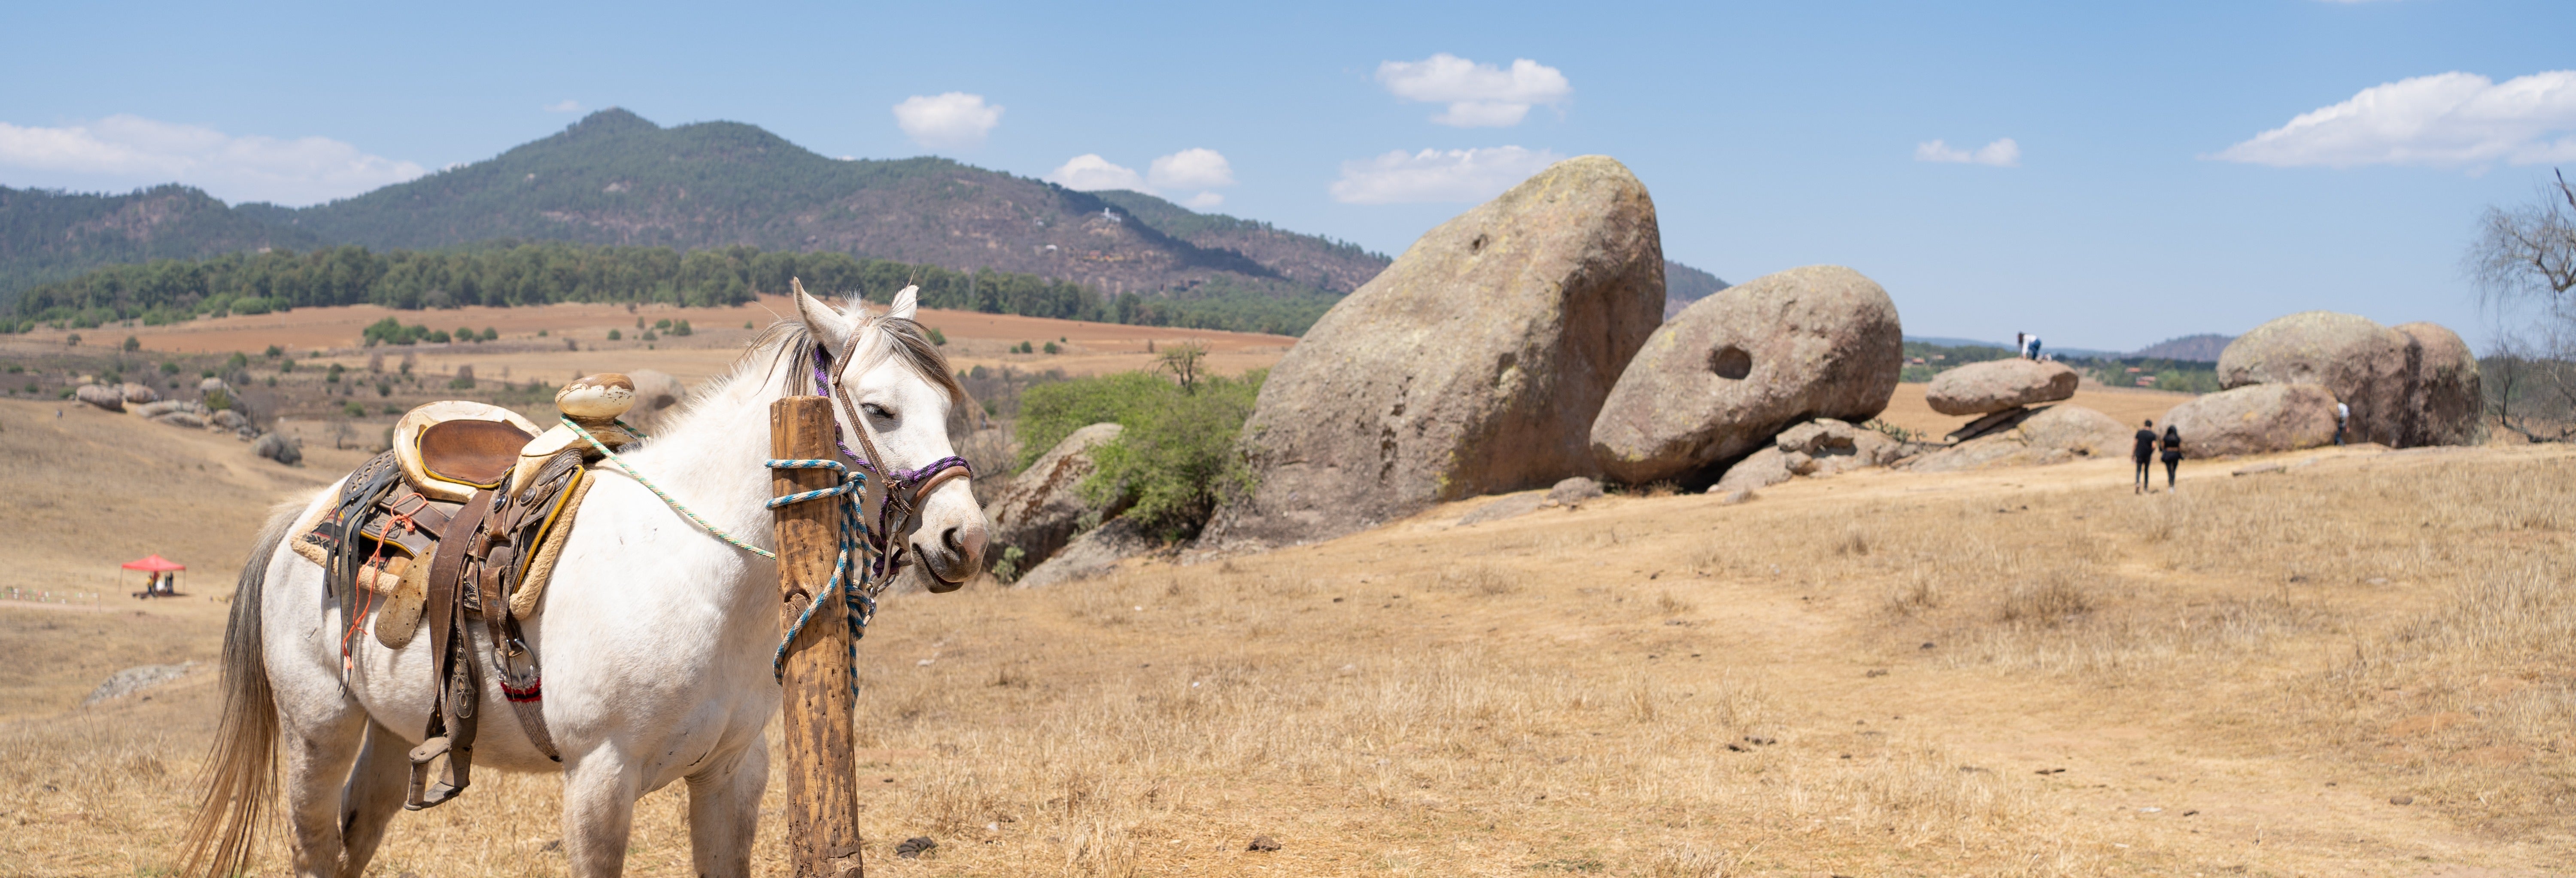 Sierra de Santa Rosa Horse Riding Tour